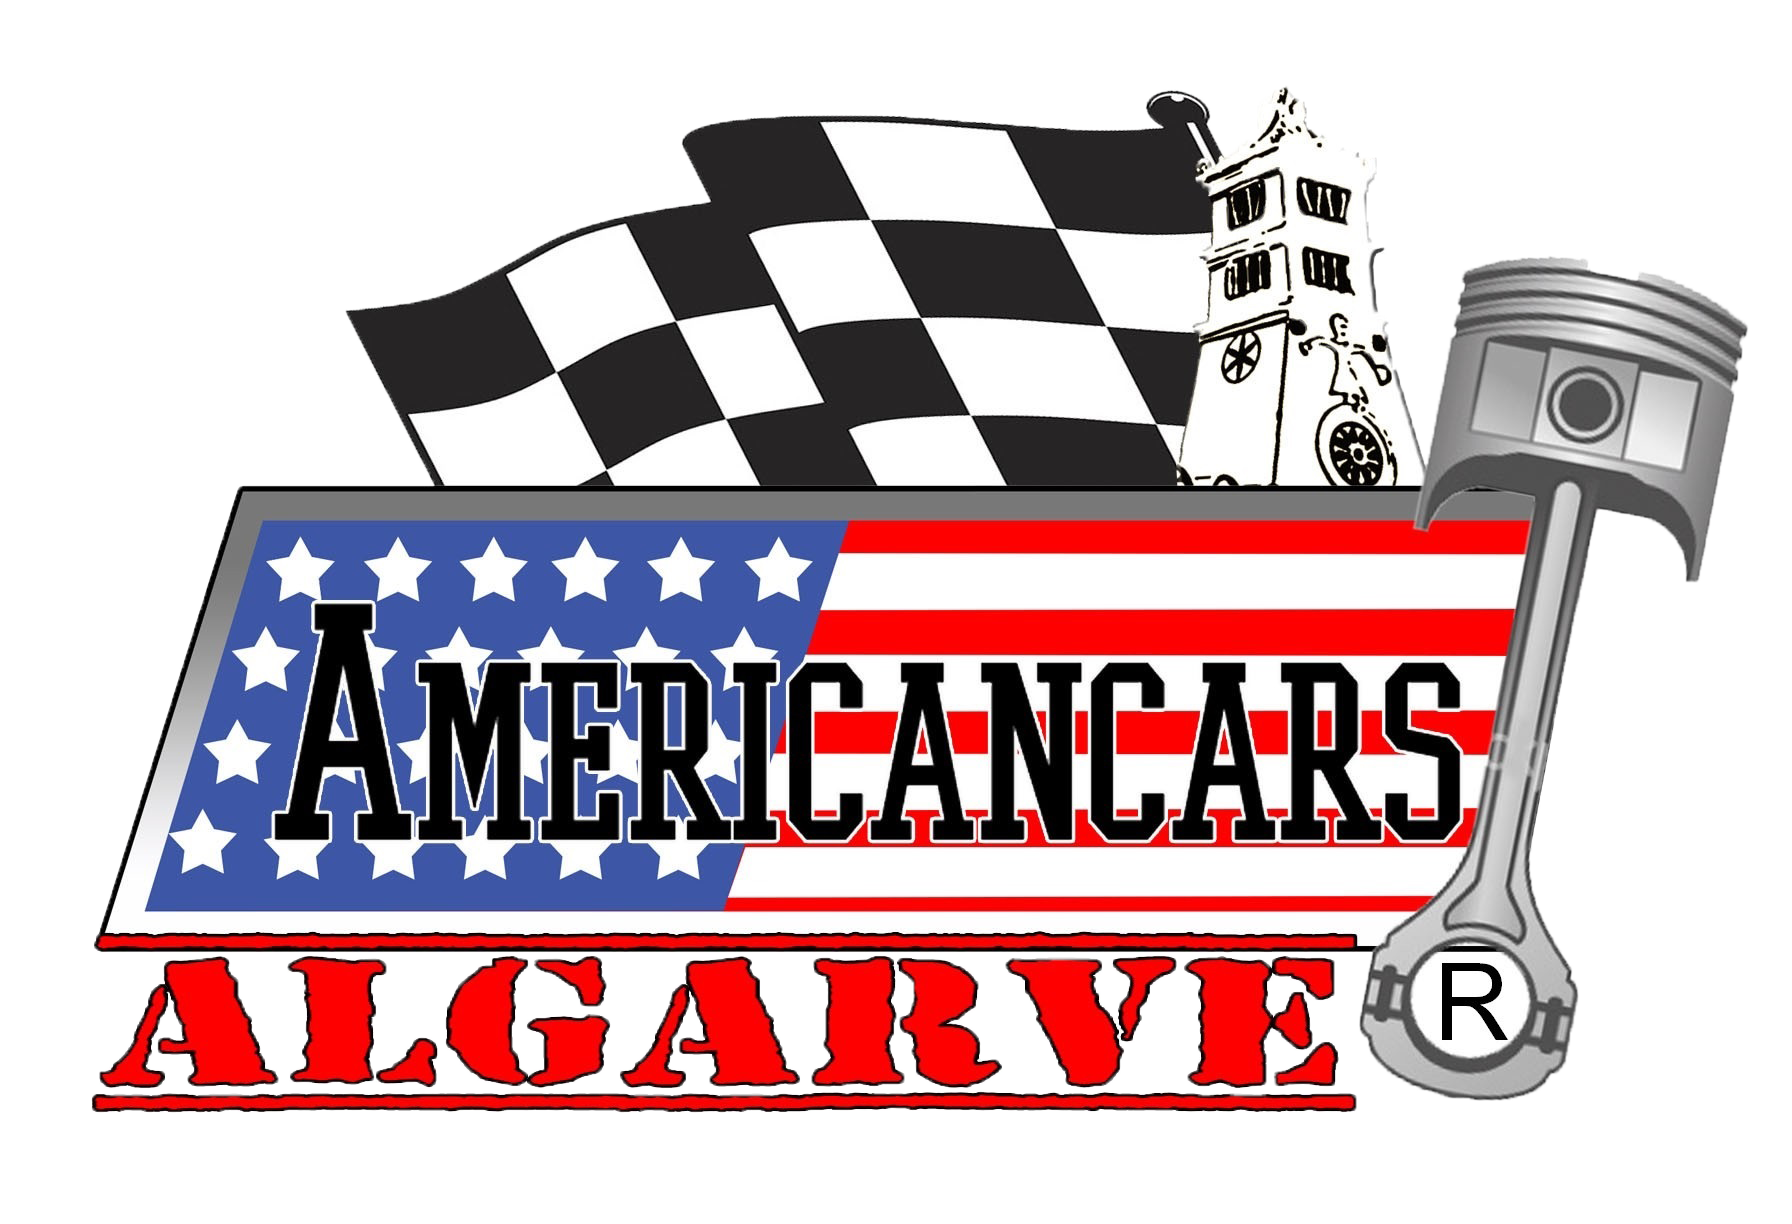 Americancars Algarve Show